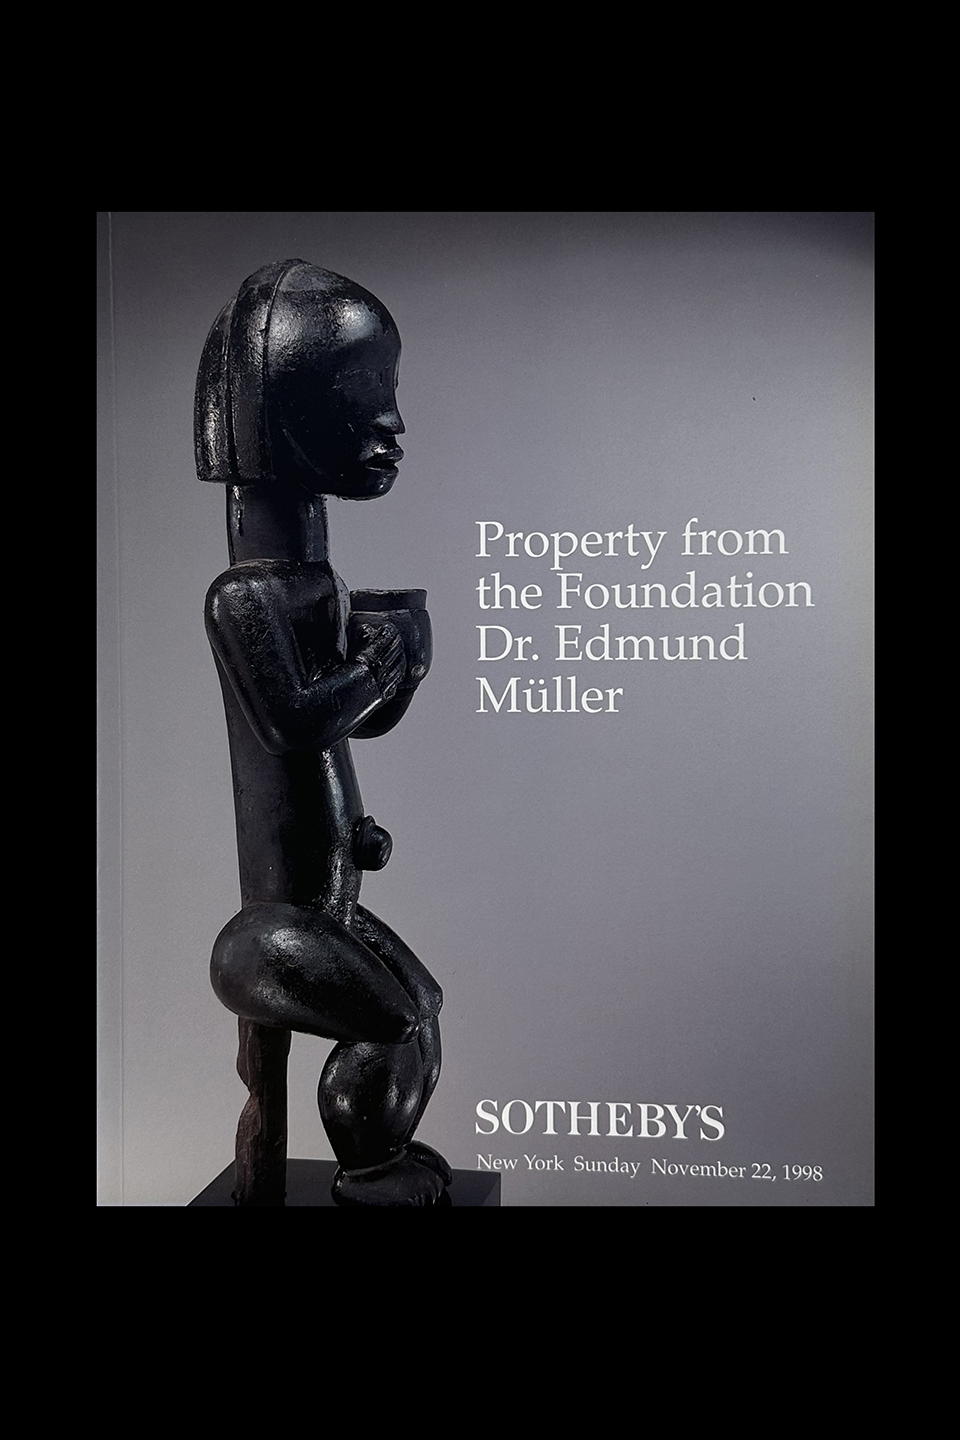  Sotheby's - Property from the Foundation Dr. Edmund Mller - New York, November, 1998